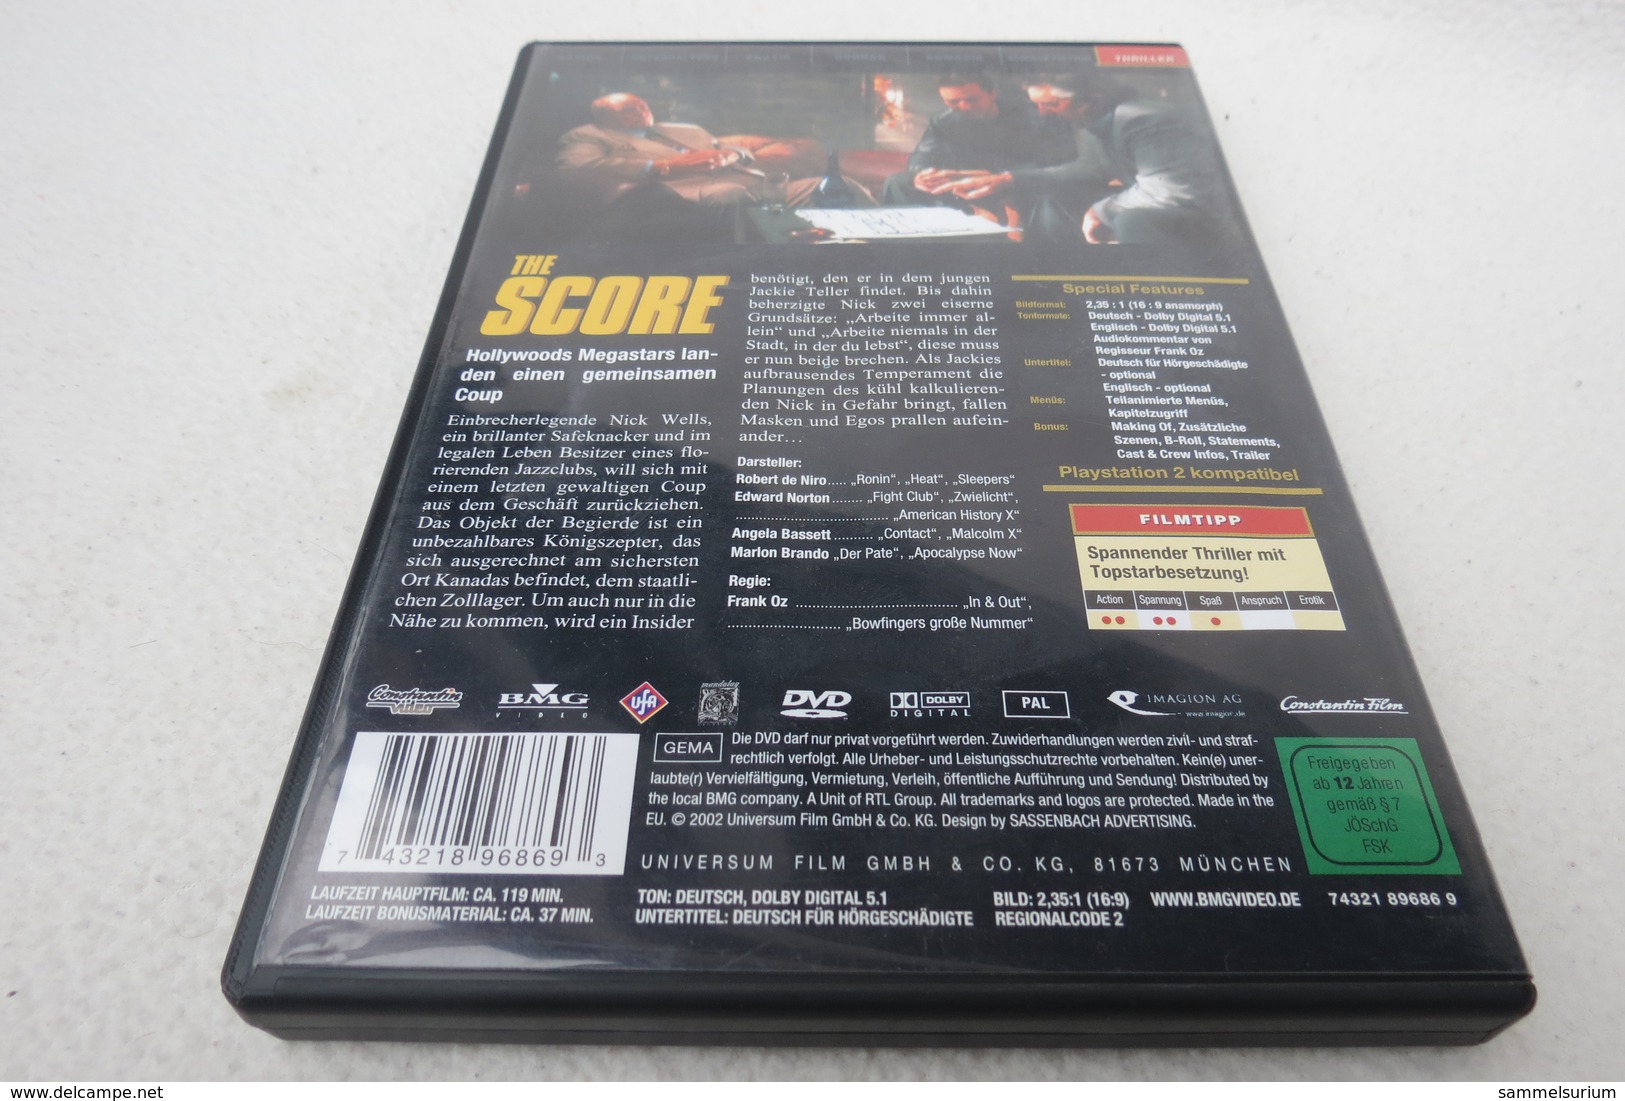 DVD "The Score" Robert De Niro, Edward Norton, Angela Bassett, Marlon Brando - Musik-DVD's